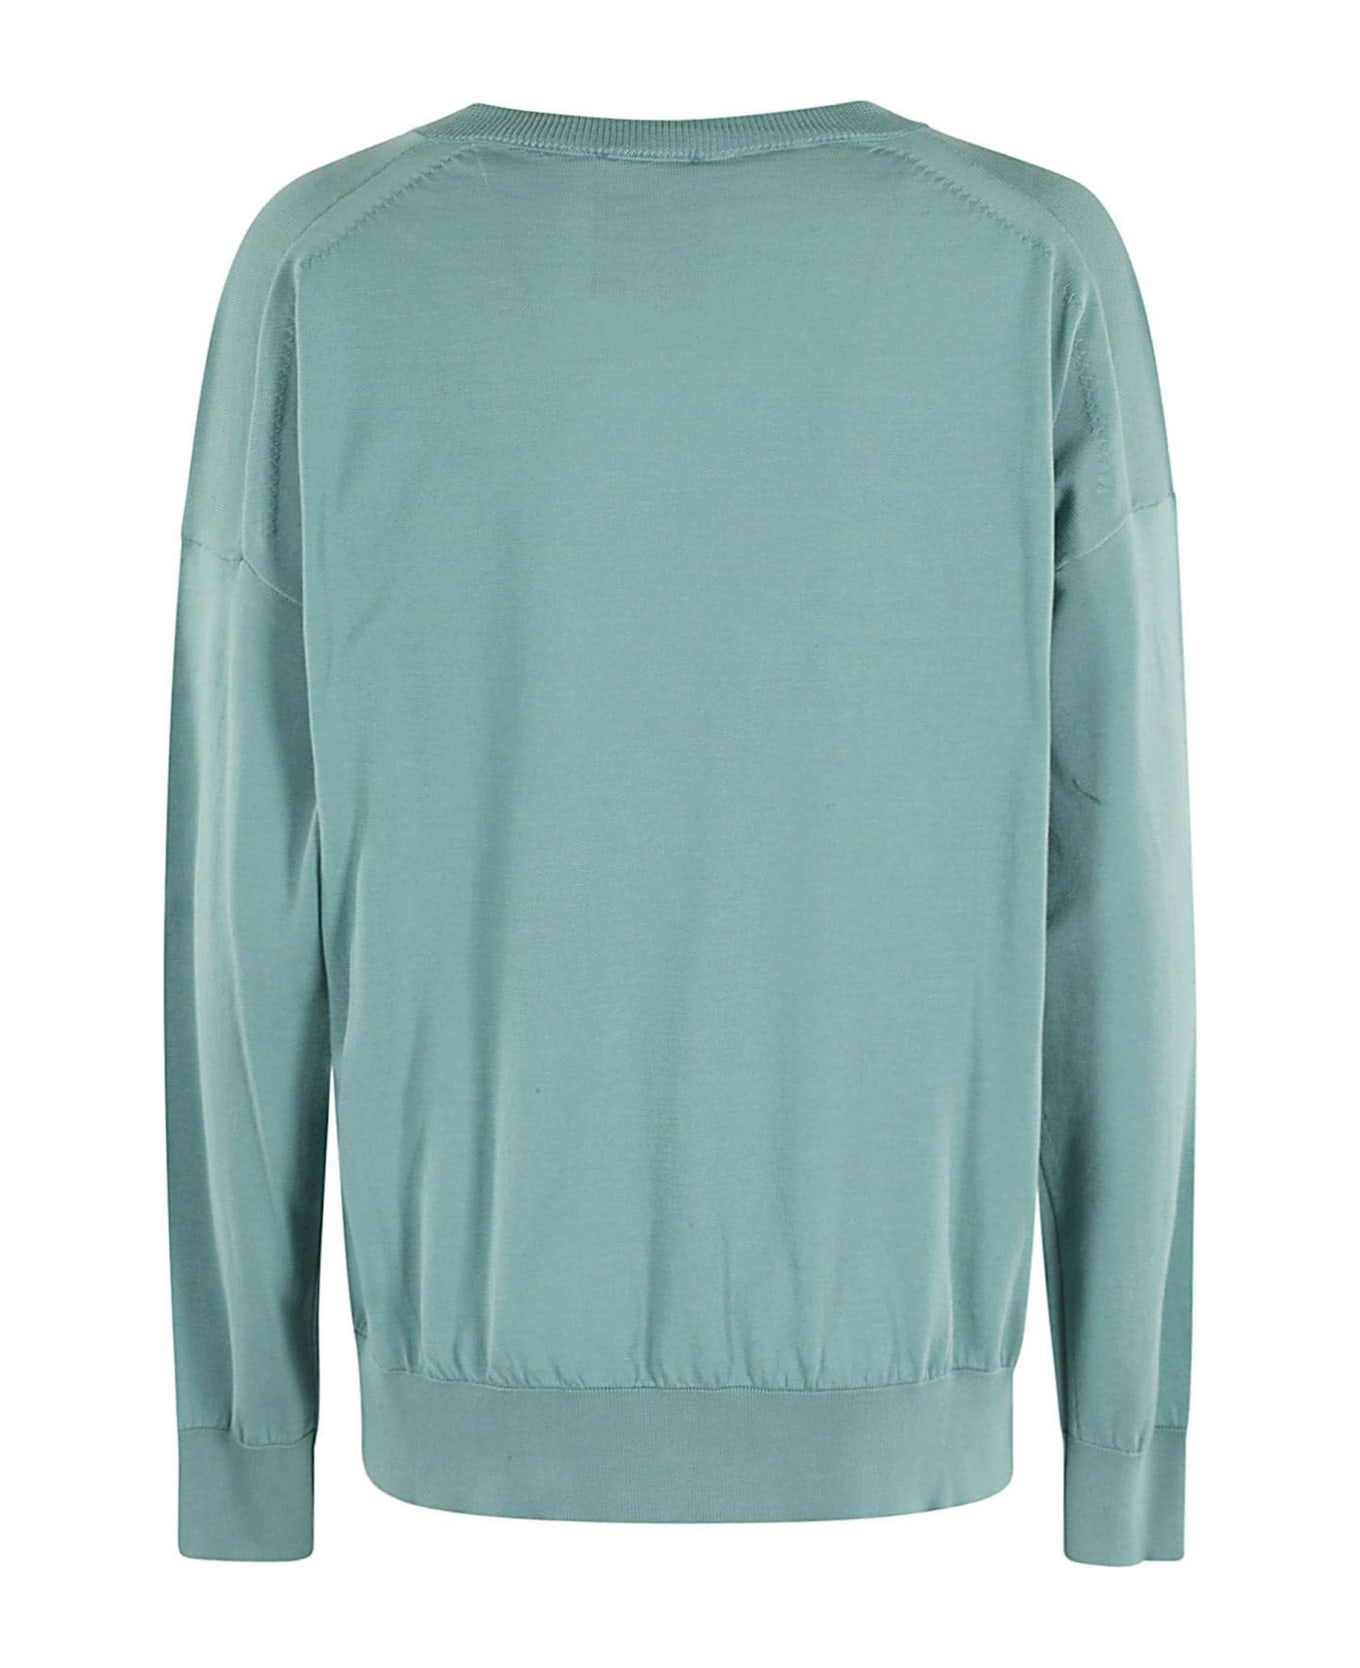 SEMICOUTURE Aquamarine Cotton Sweater - Green ニットウェア